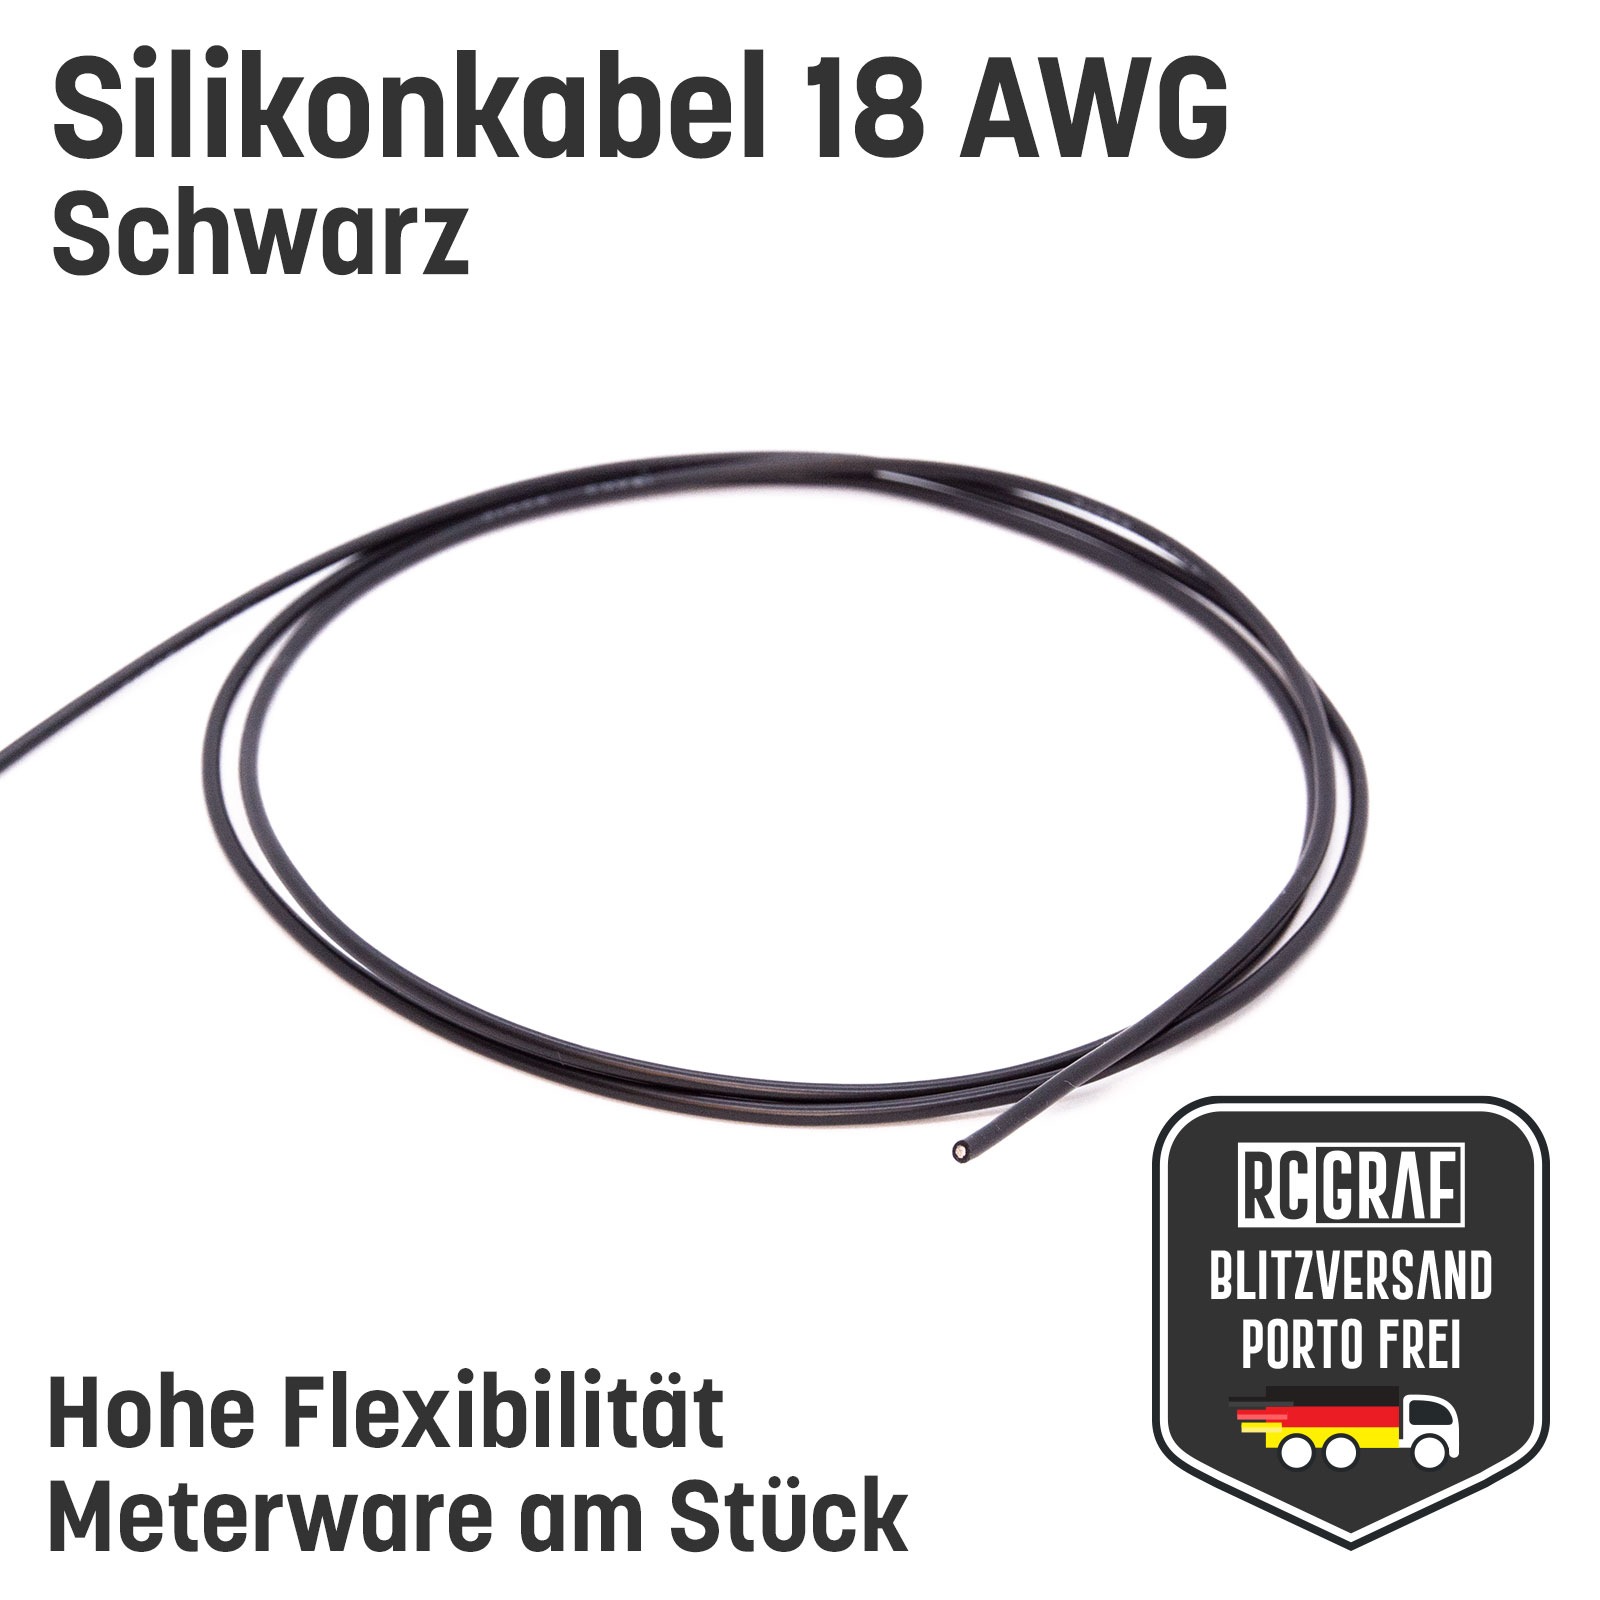 Silikonkabel 18 AWG 5 Meter Schwarz hochflexibel